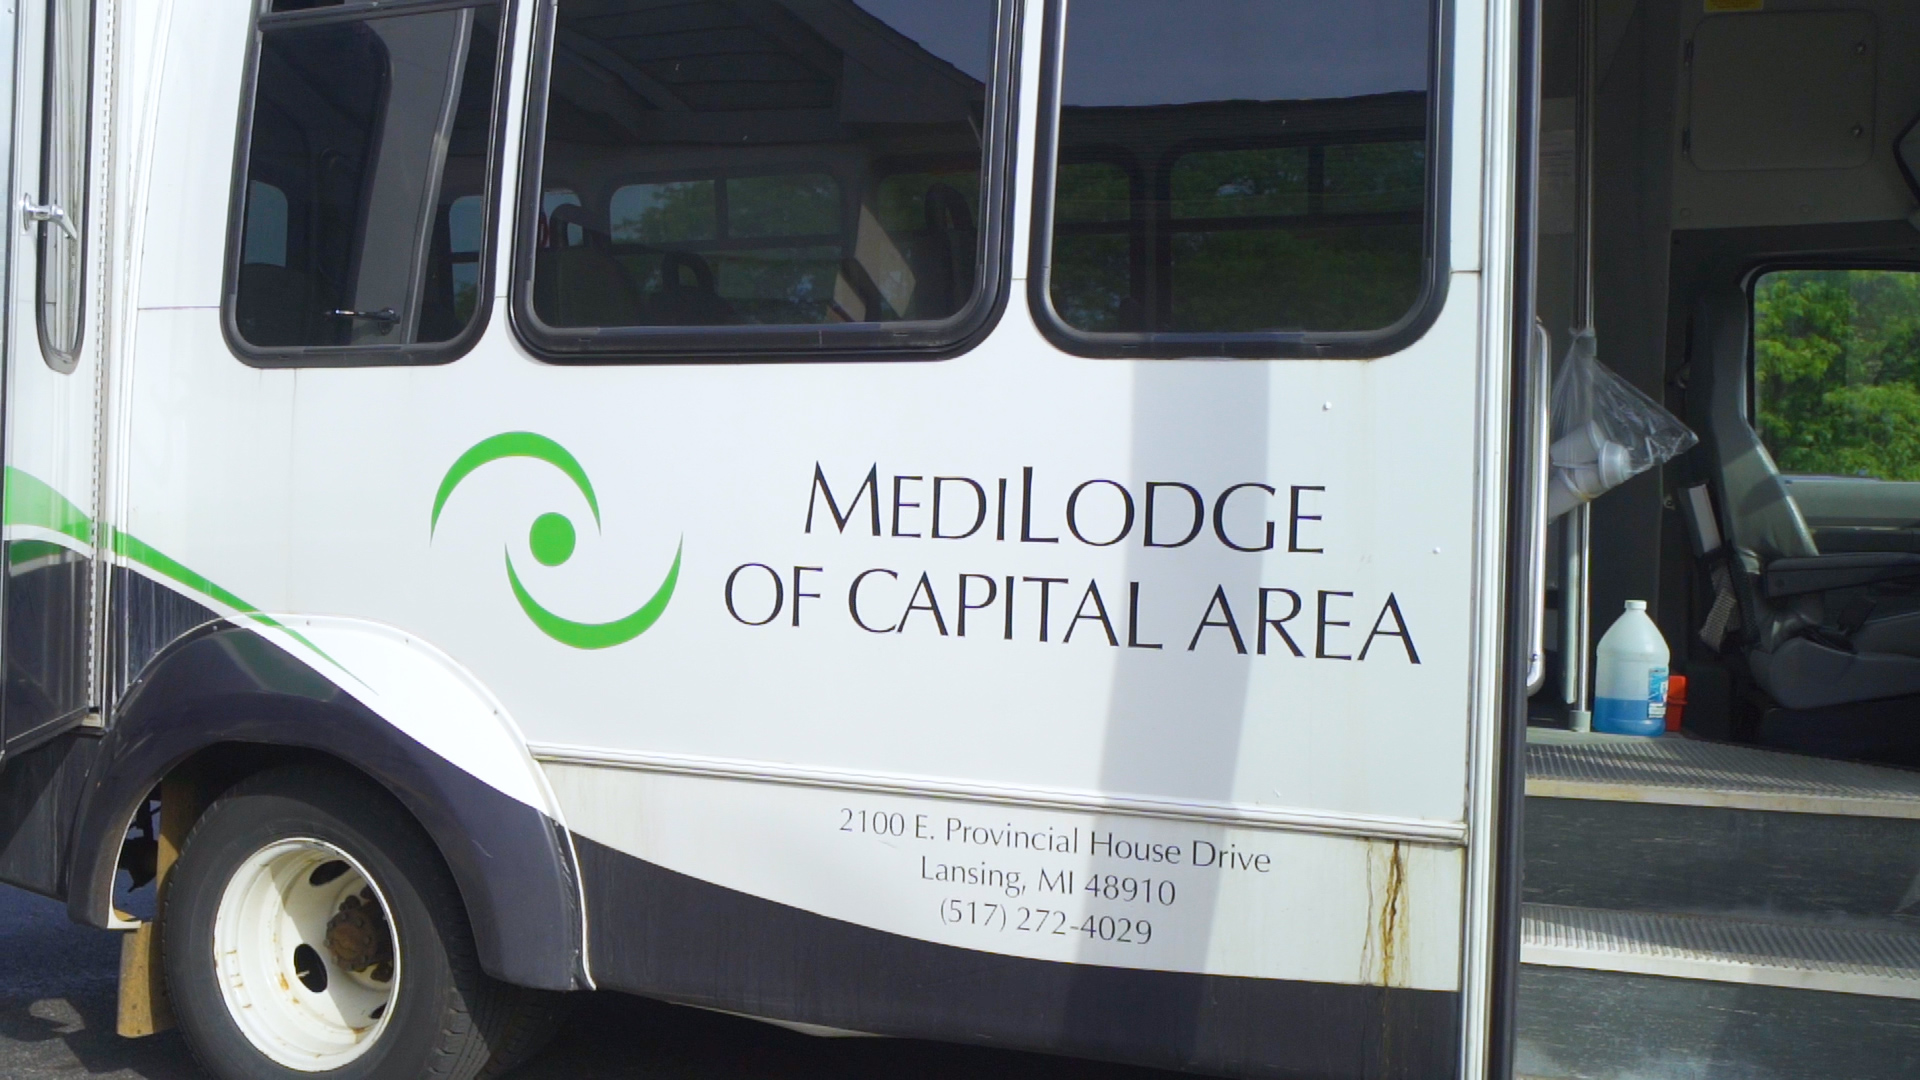 Medilodge of Capital Area Bus